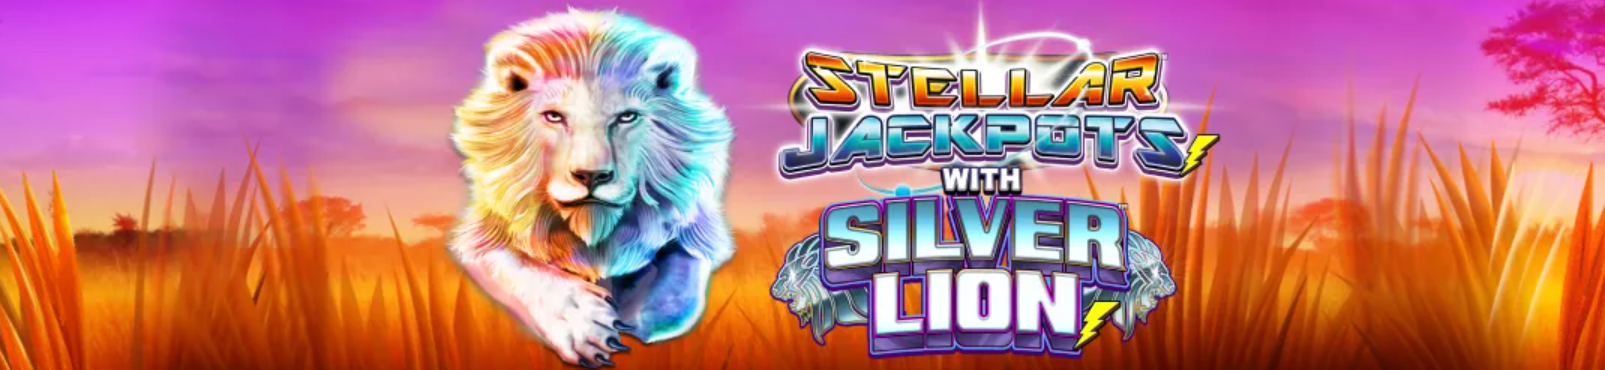 Stellar jackpots with silver lion slot logo